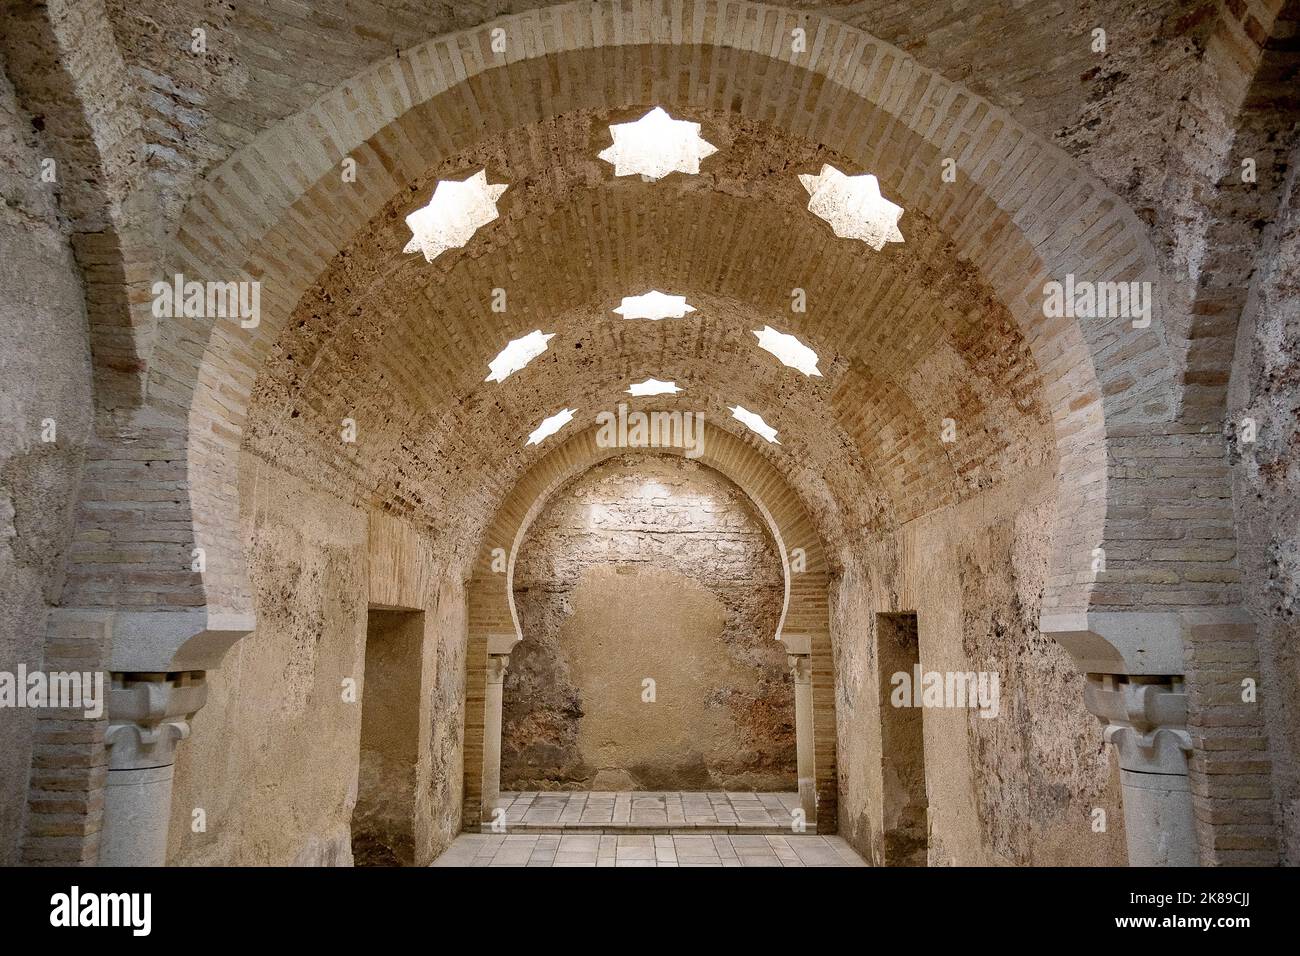 Baños árabes jaén fotografías e imágenes de alta resolución - Alamy